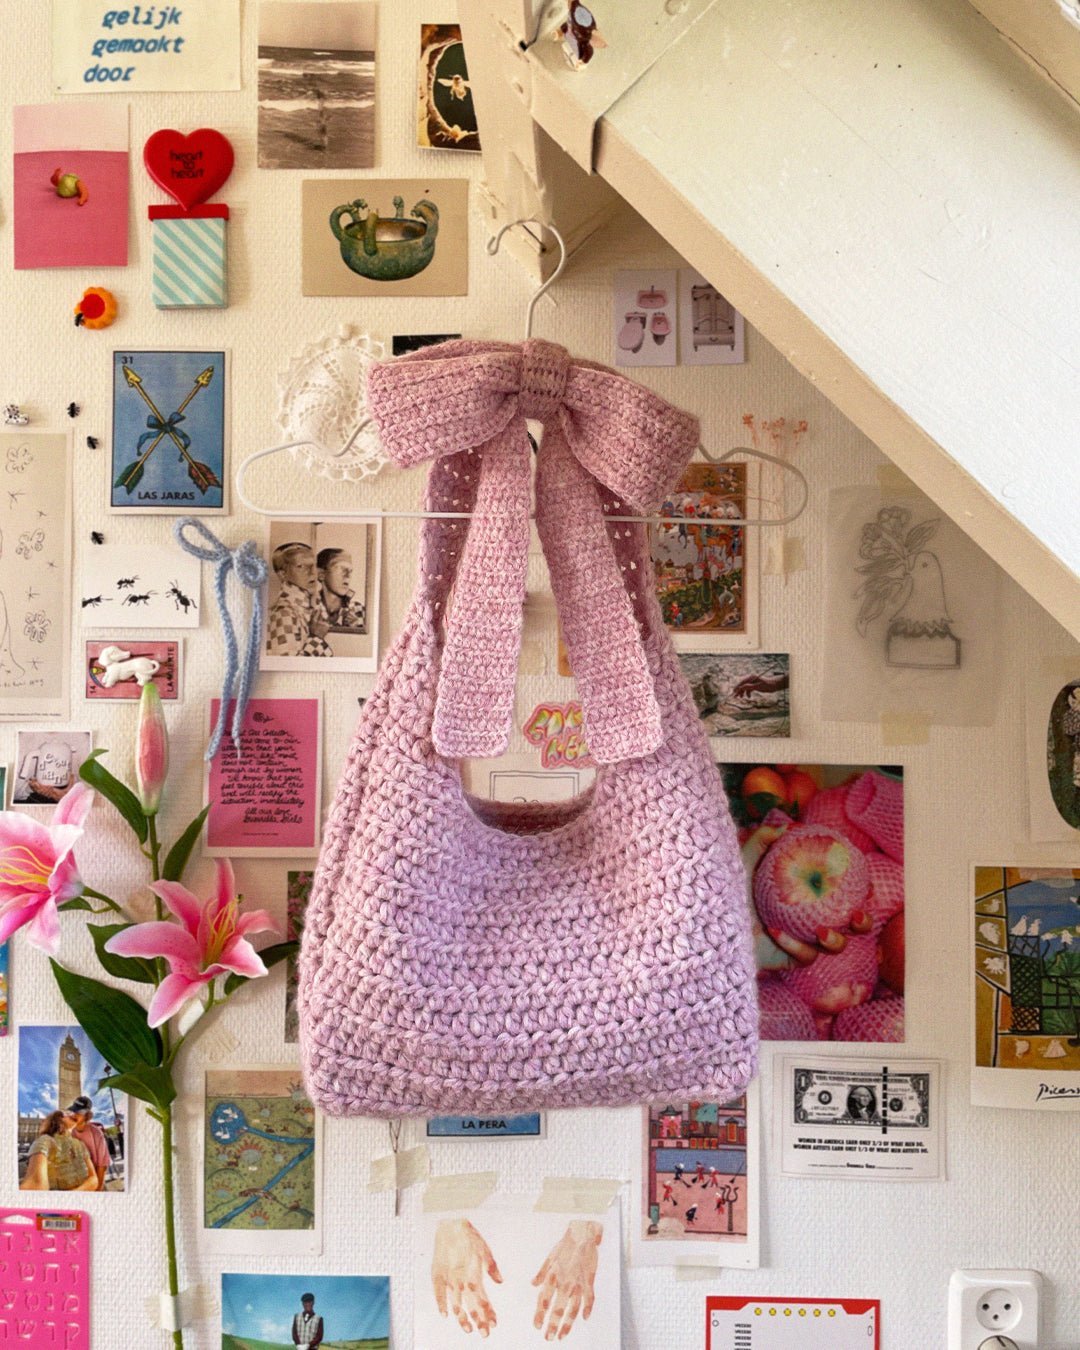 Handmade Women Girls T - Shirt Yarn Crochet Handbags, Shoulder Bag